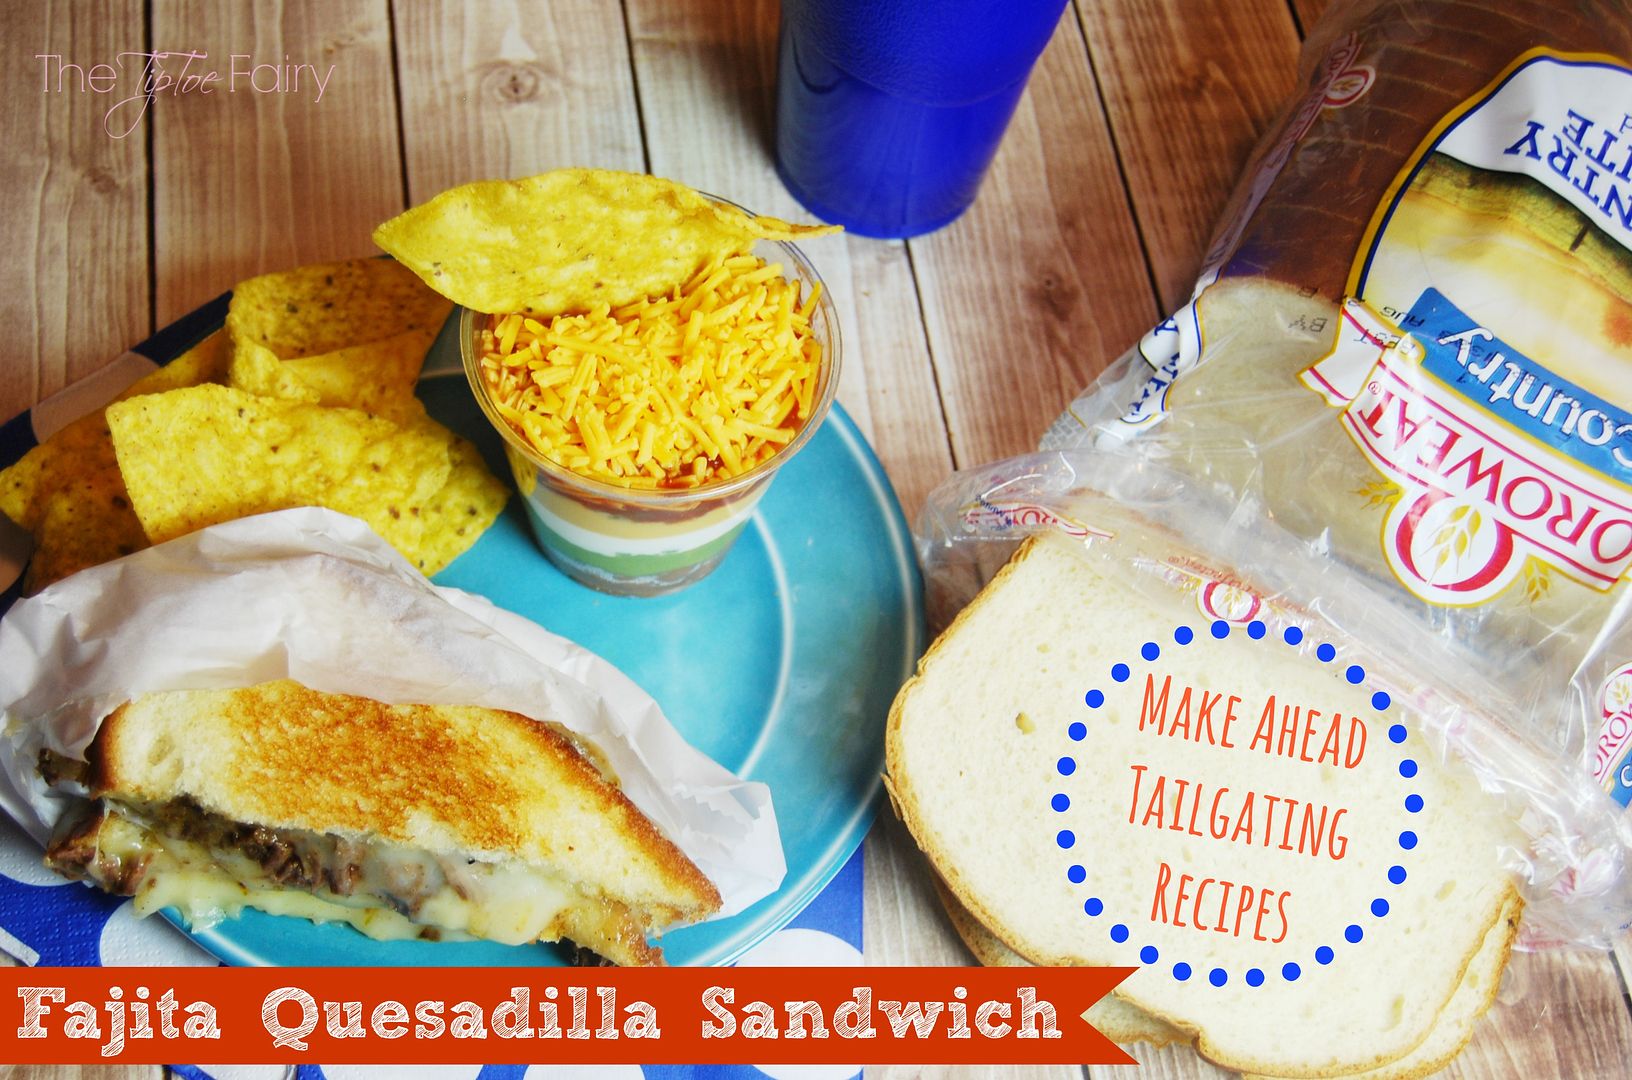 Fajita Quesadilla Sandwiches | The TipToe Fairy #CollectiveBias #shop #tailgating #makeheadrecipes #sandwichrecipes